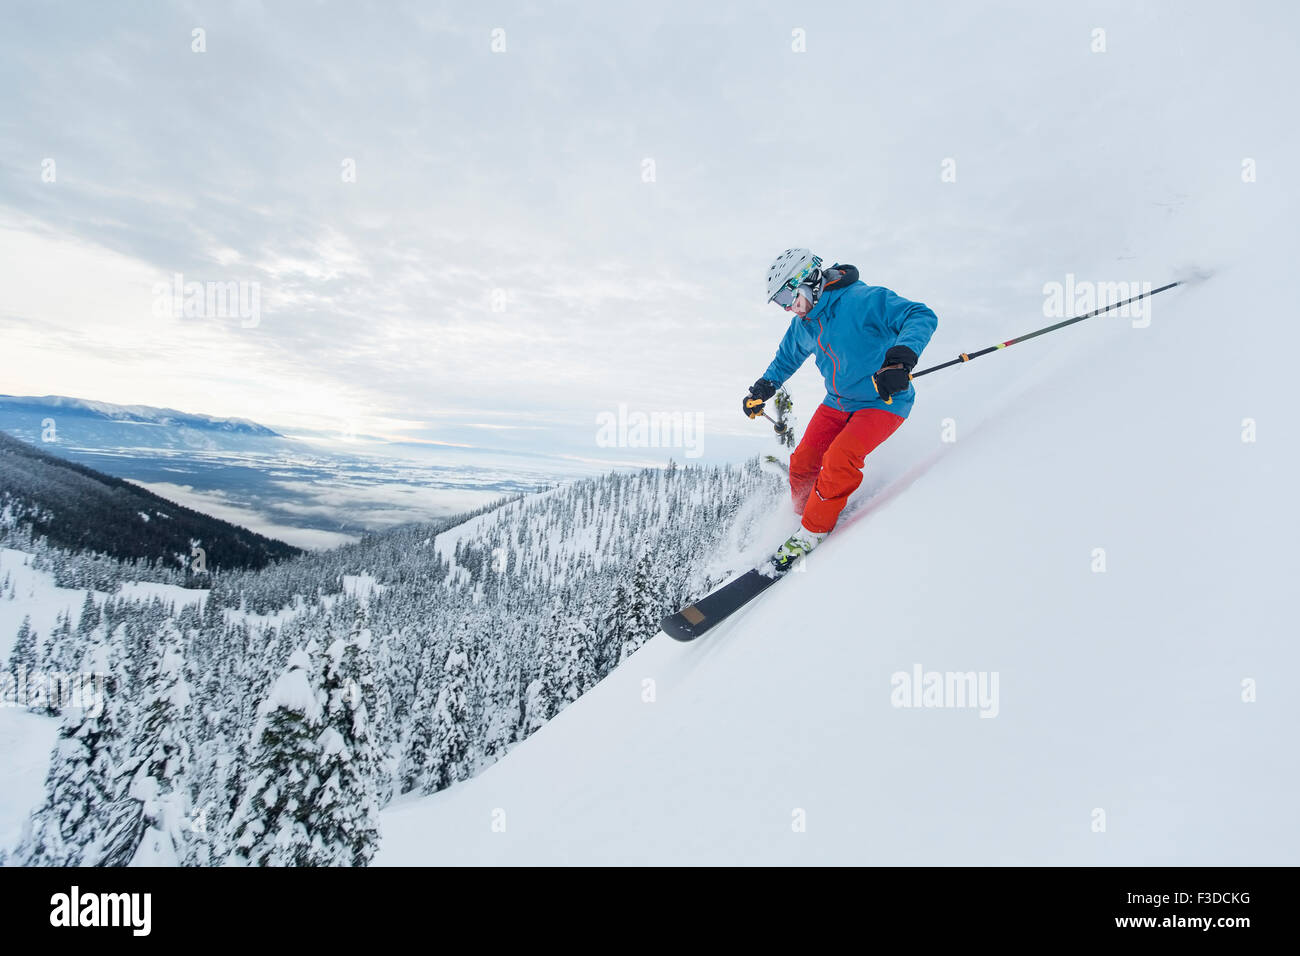 Mature man speeding on ski slope Stock Photo